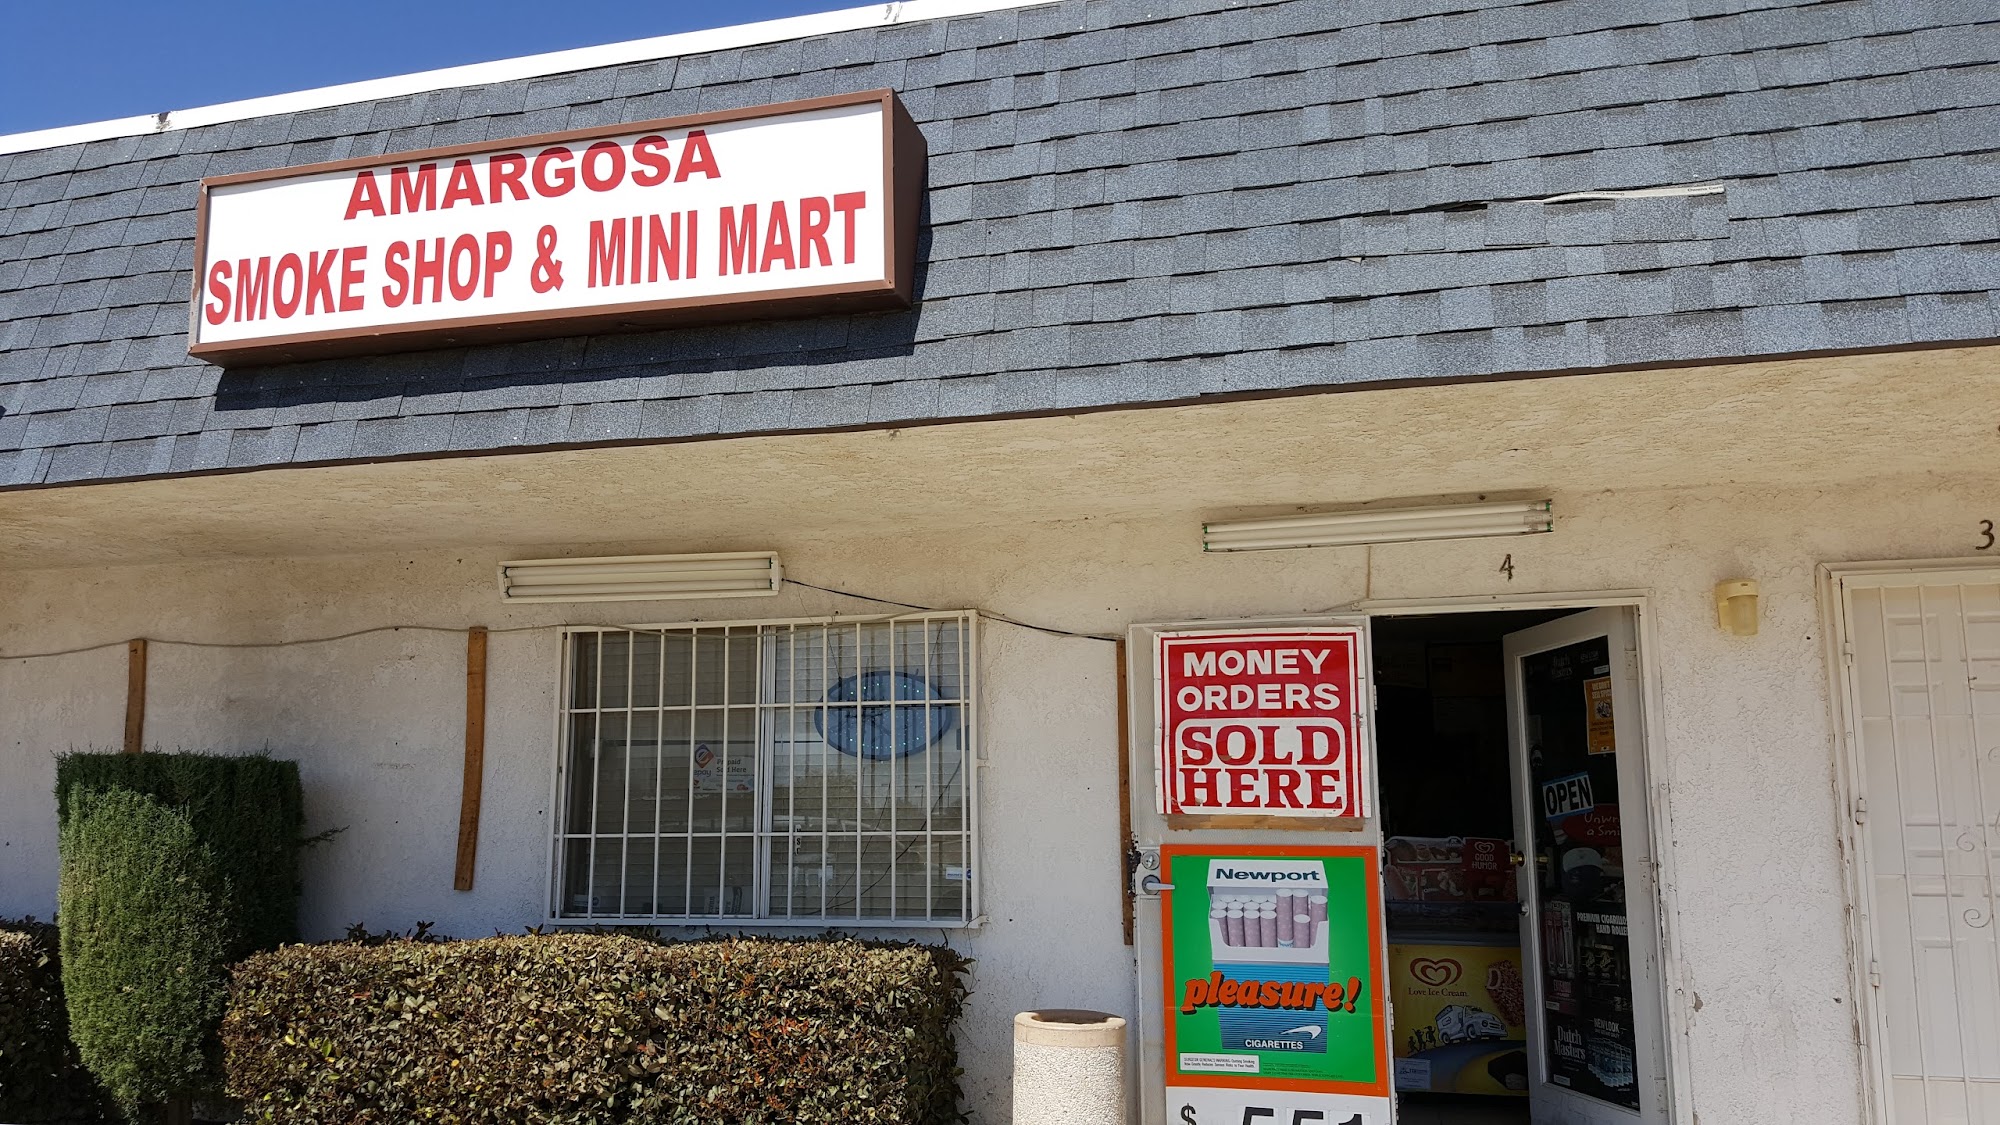 Amargosa Smoke Shop & Mini